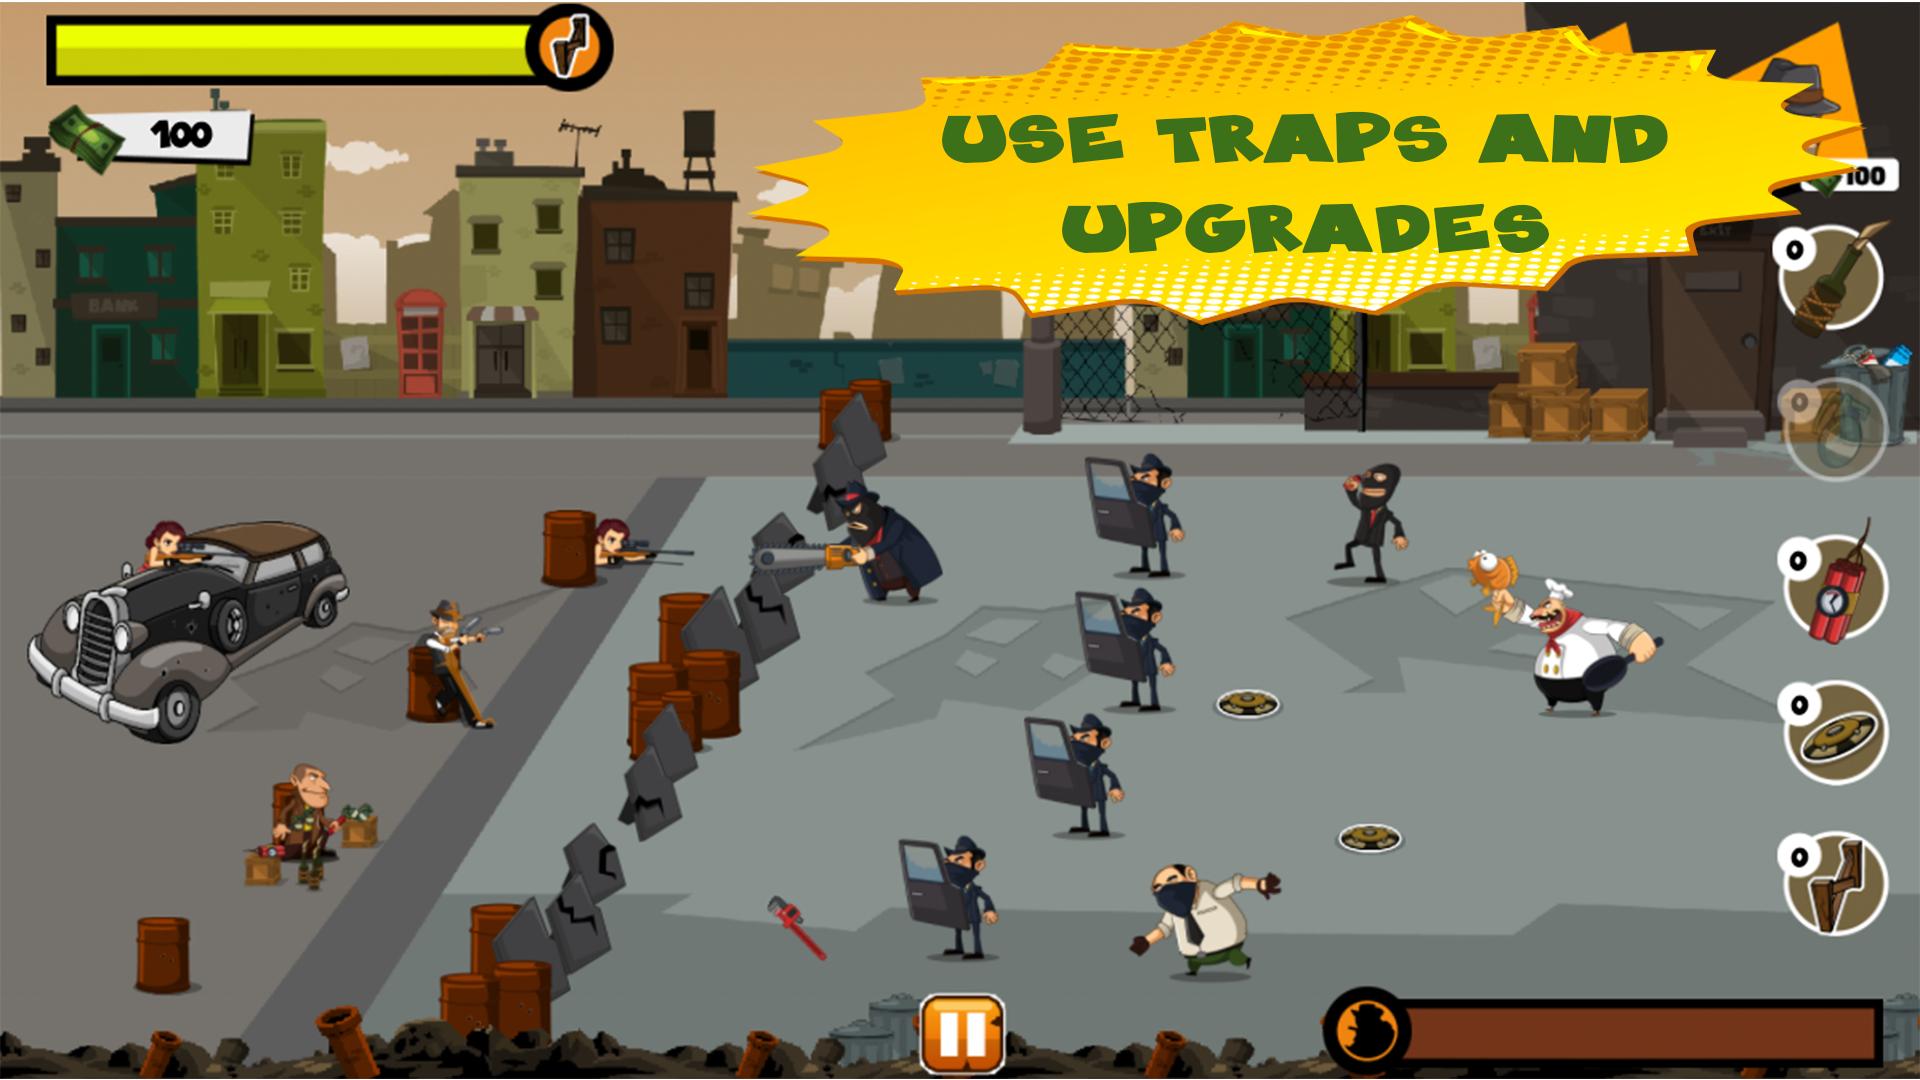 Gang Wars game. Гангстерские войны игра PC. Territory Wars. Gangs wars pixel